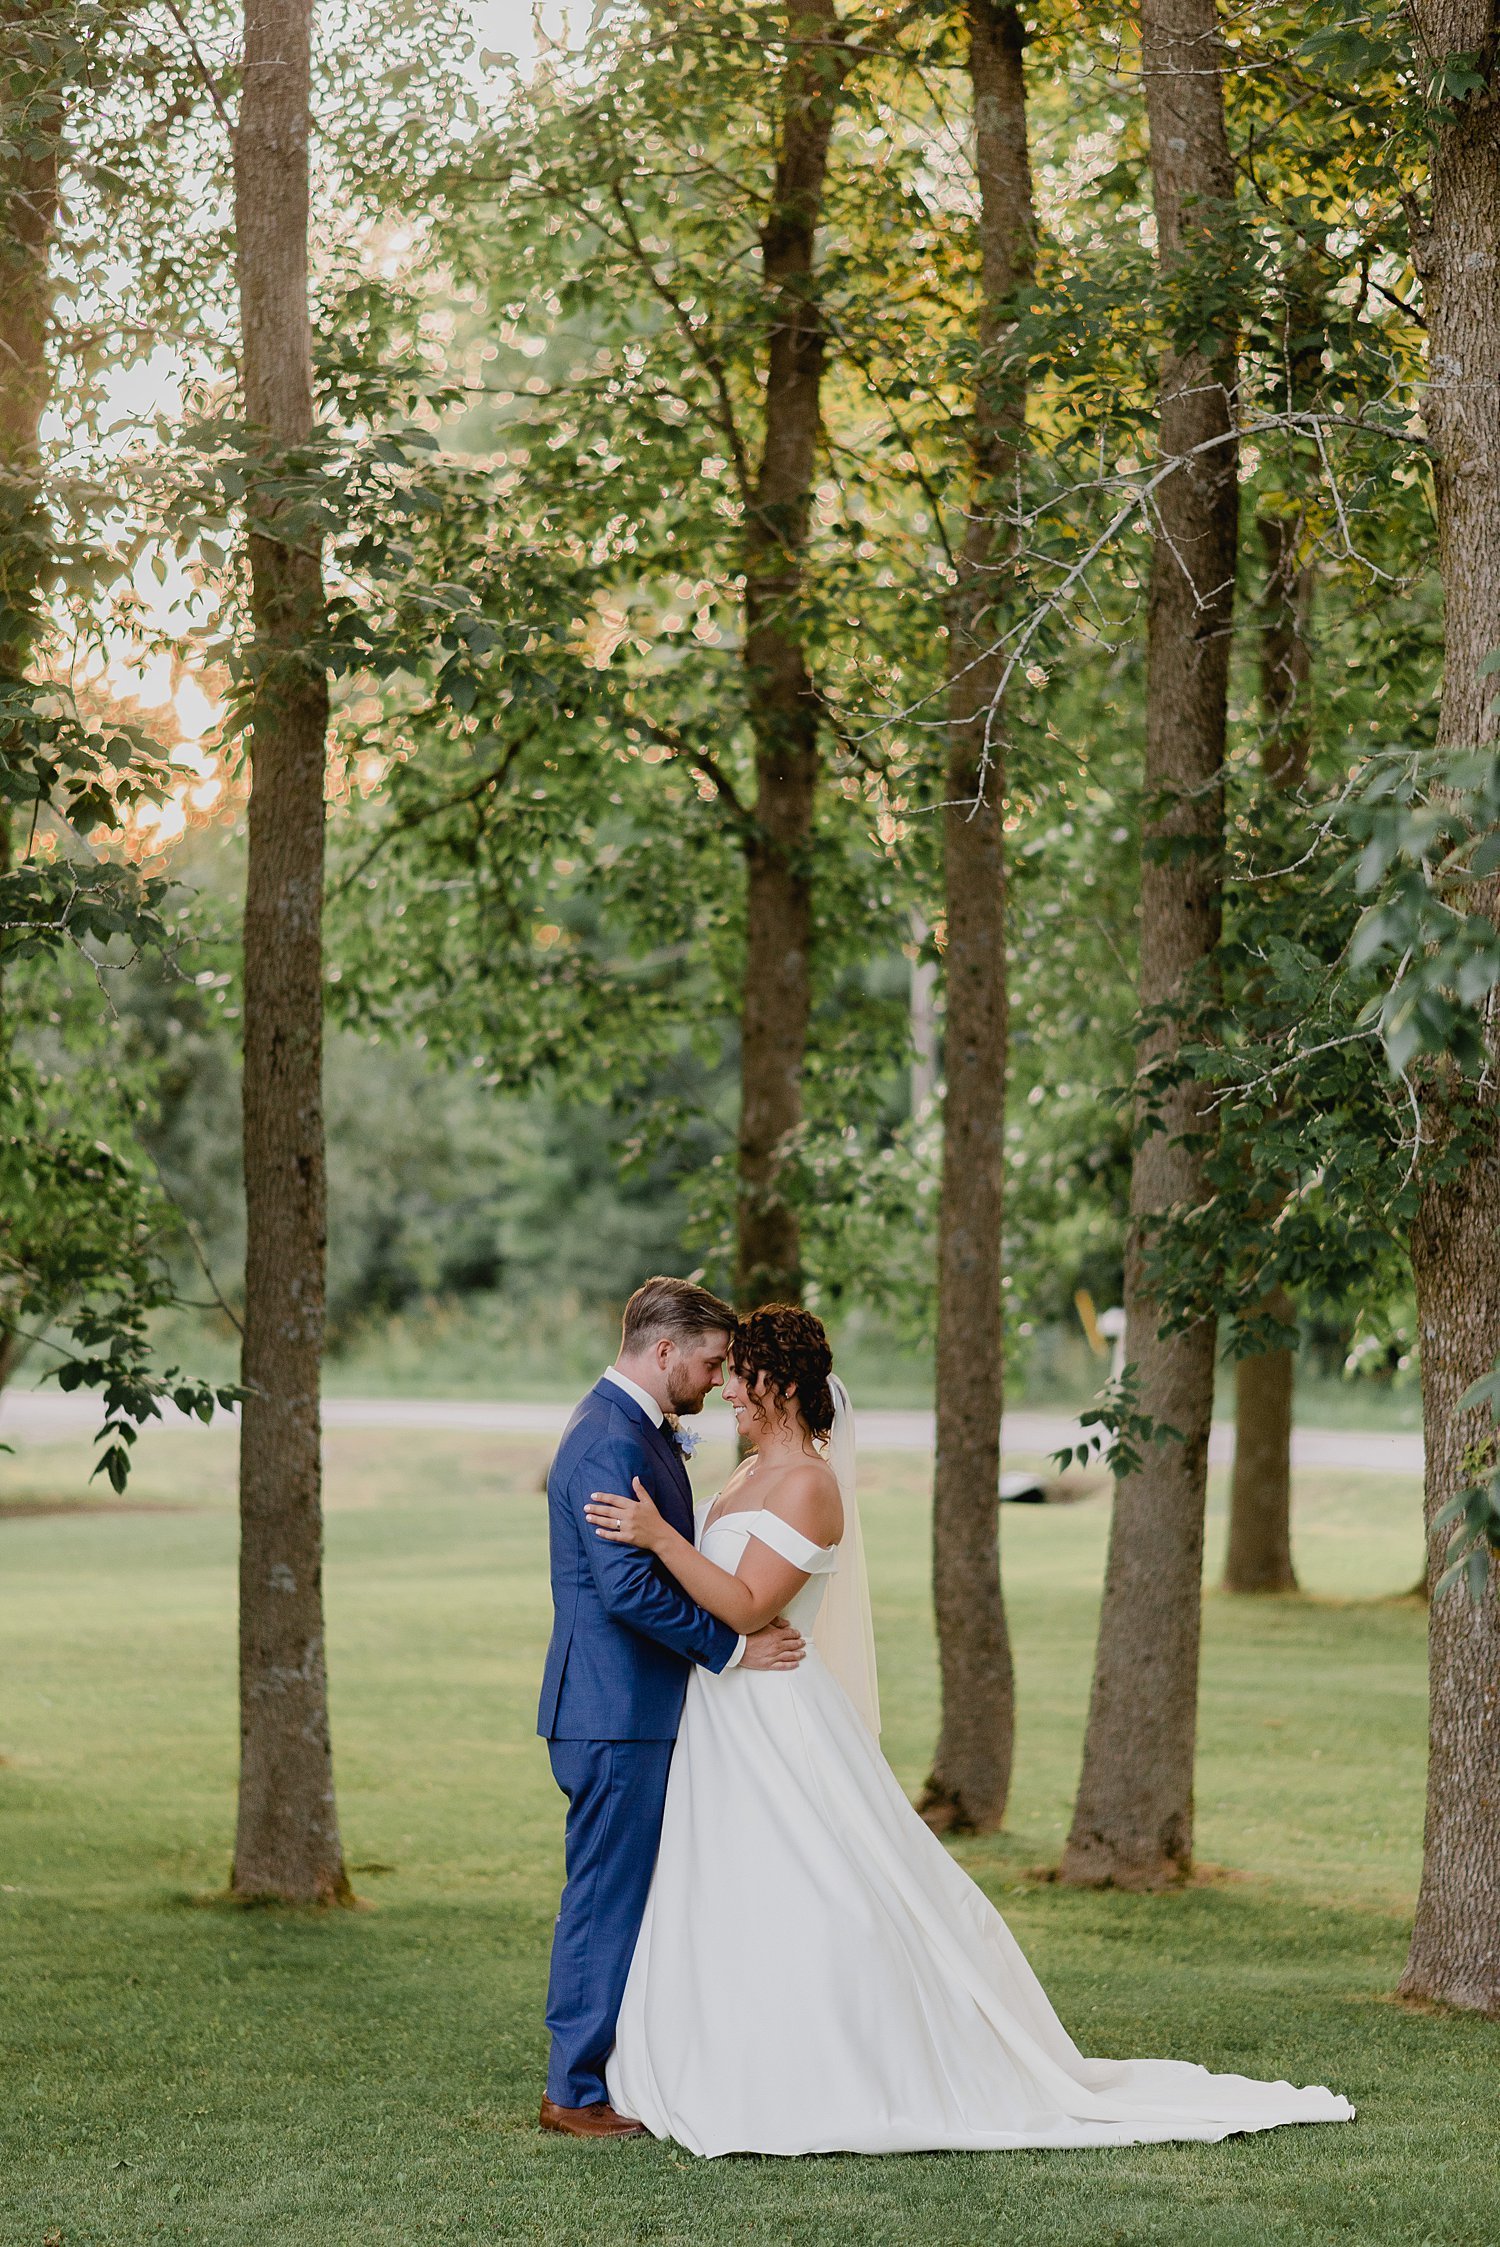 Elegant Summer Backyard Tented Wedding in Sydenham, Ontario | Prince Edward County Wedding Photographer | Holly McMurter Photographs_0091.jpg